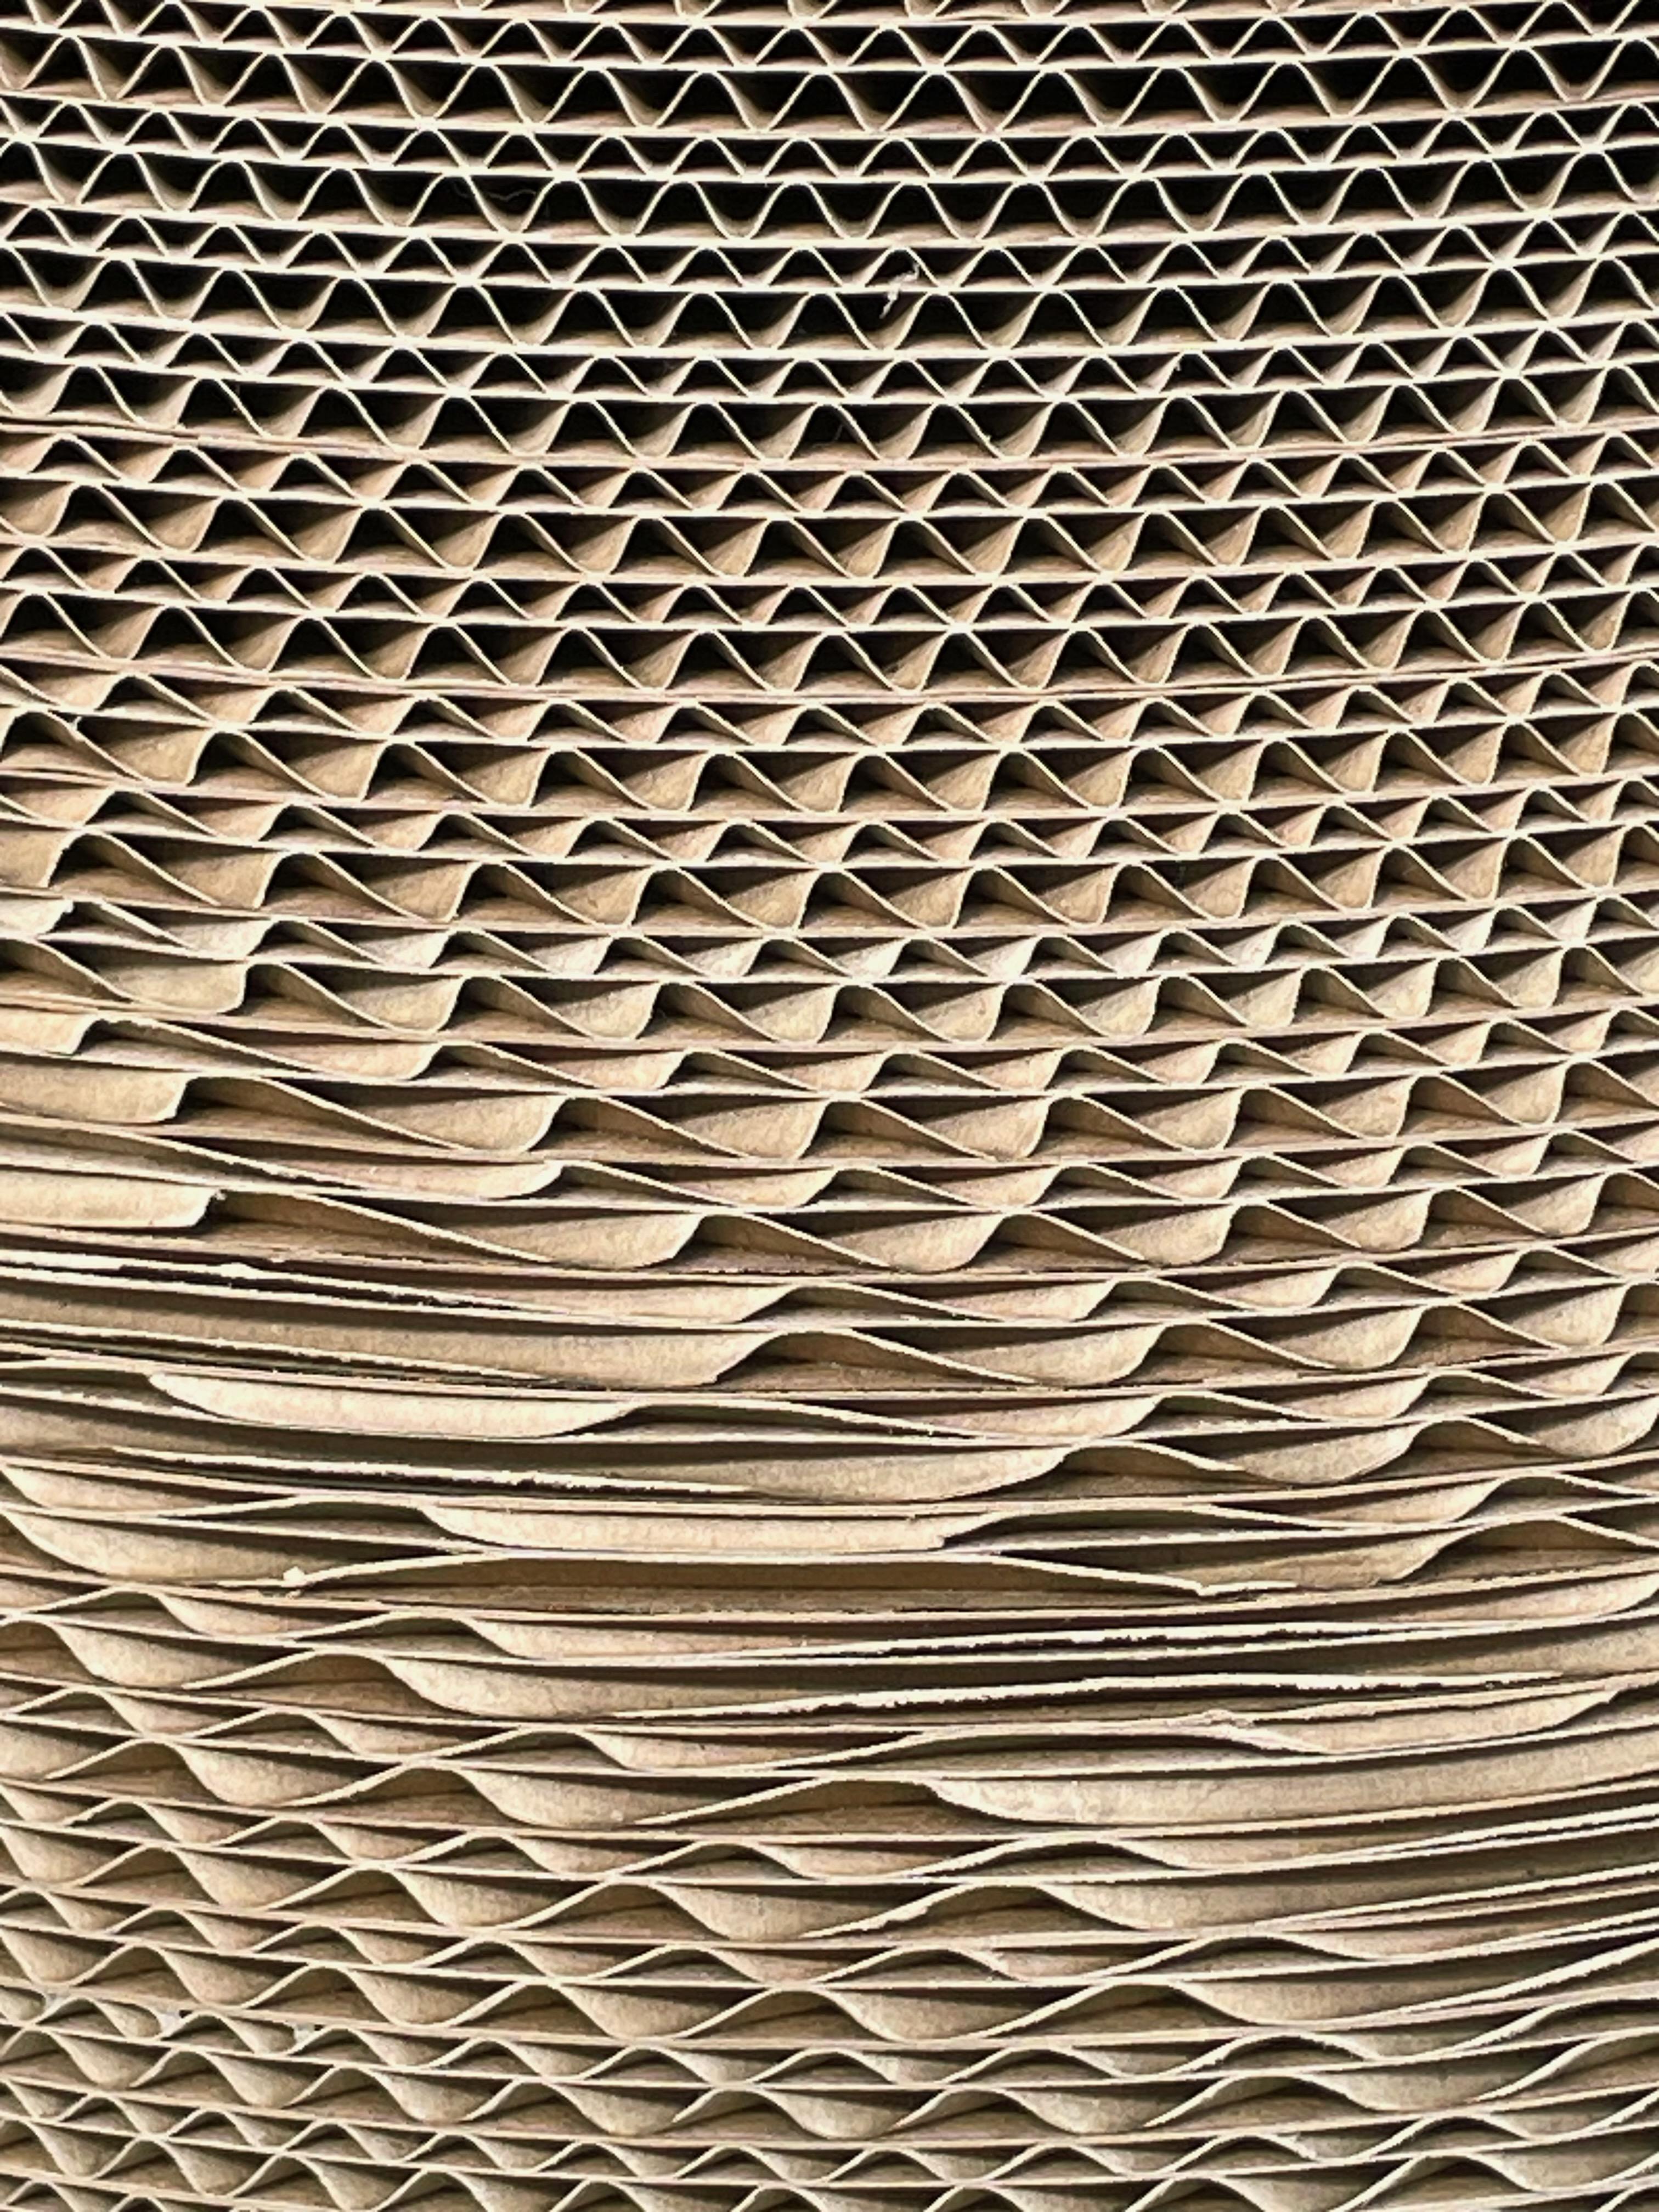 Corrugated Paper Vase Sculpture, France, Contemporary 1